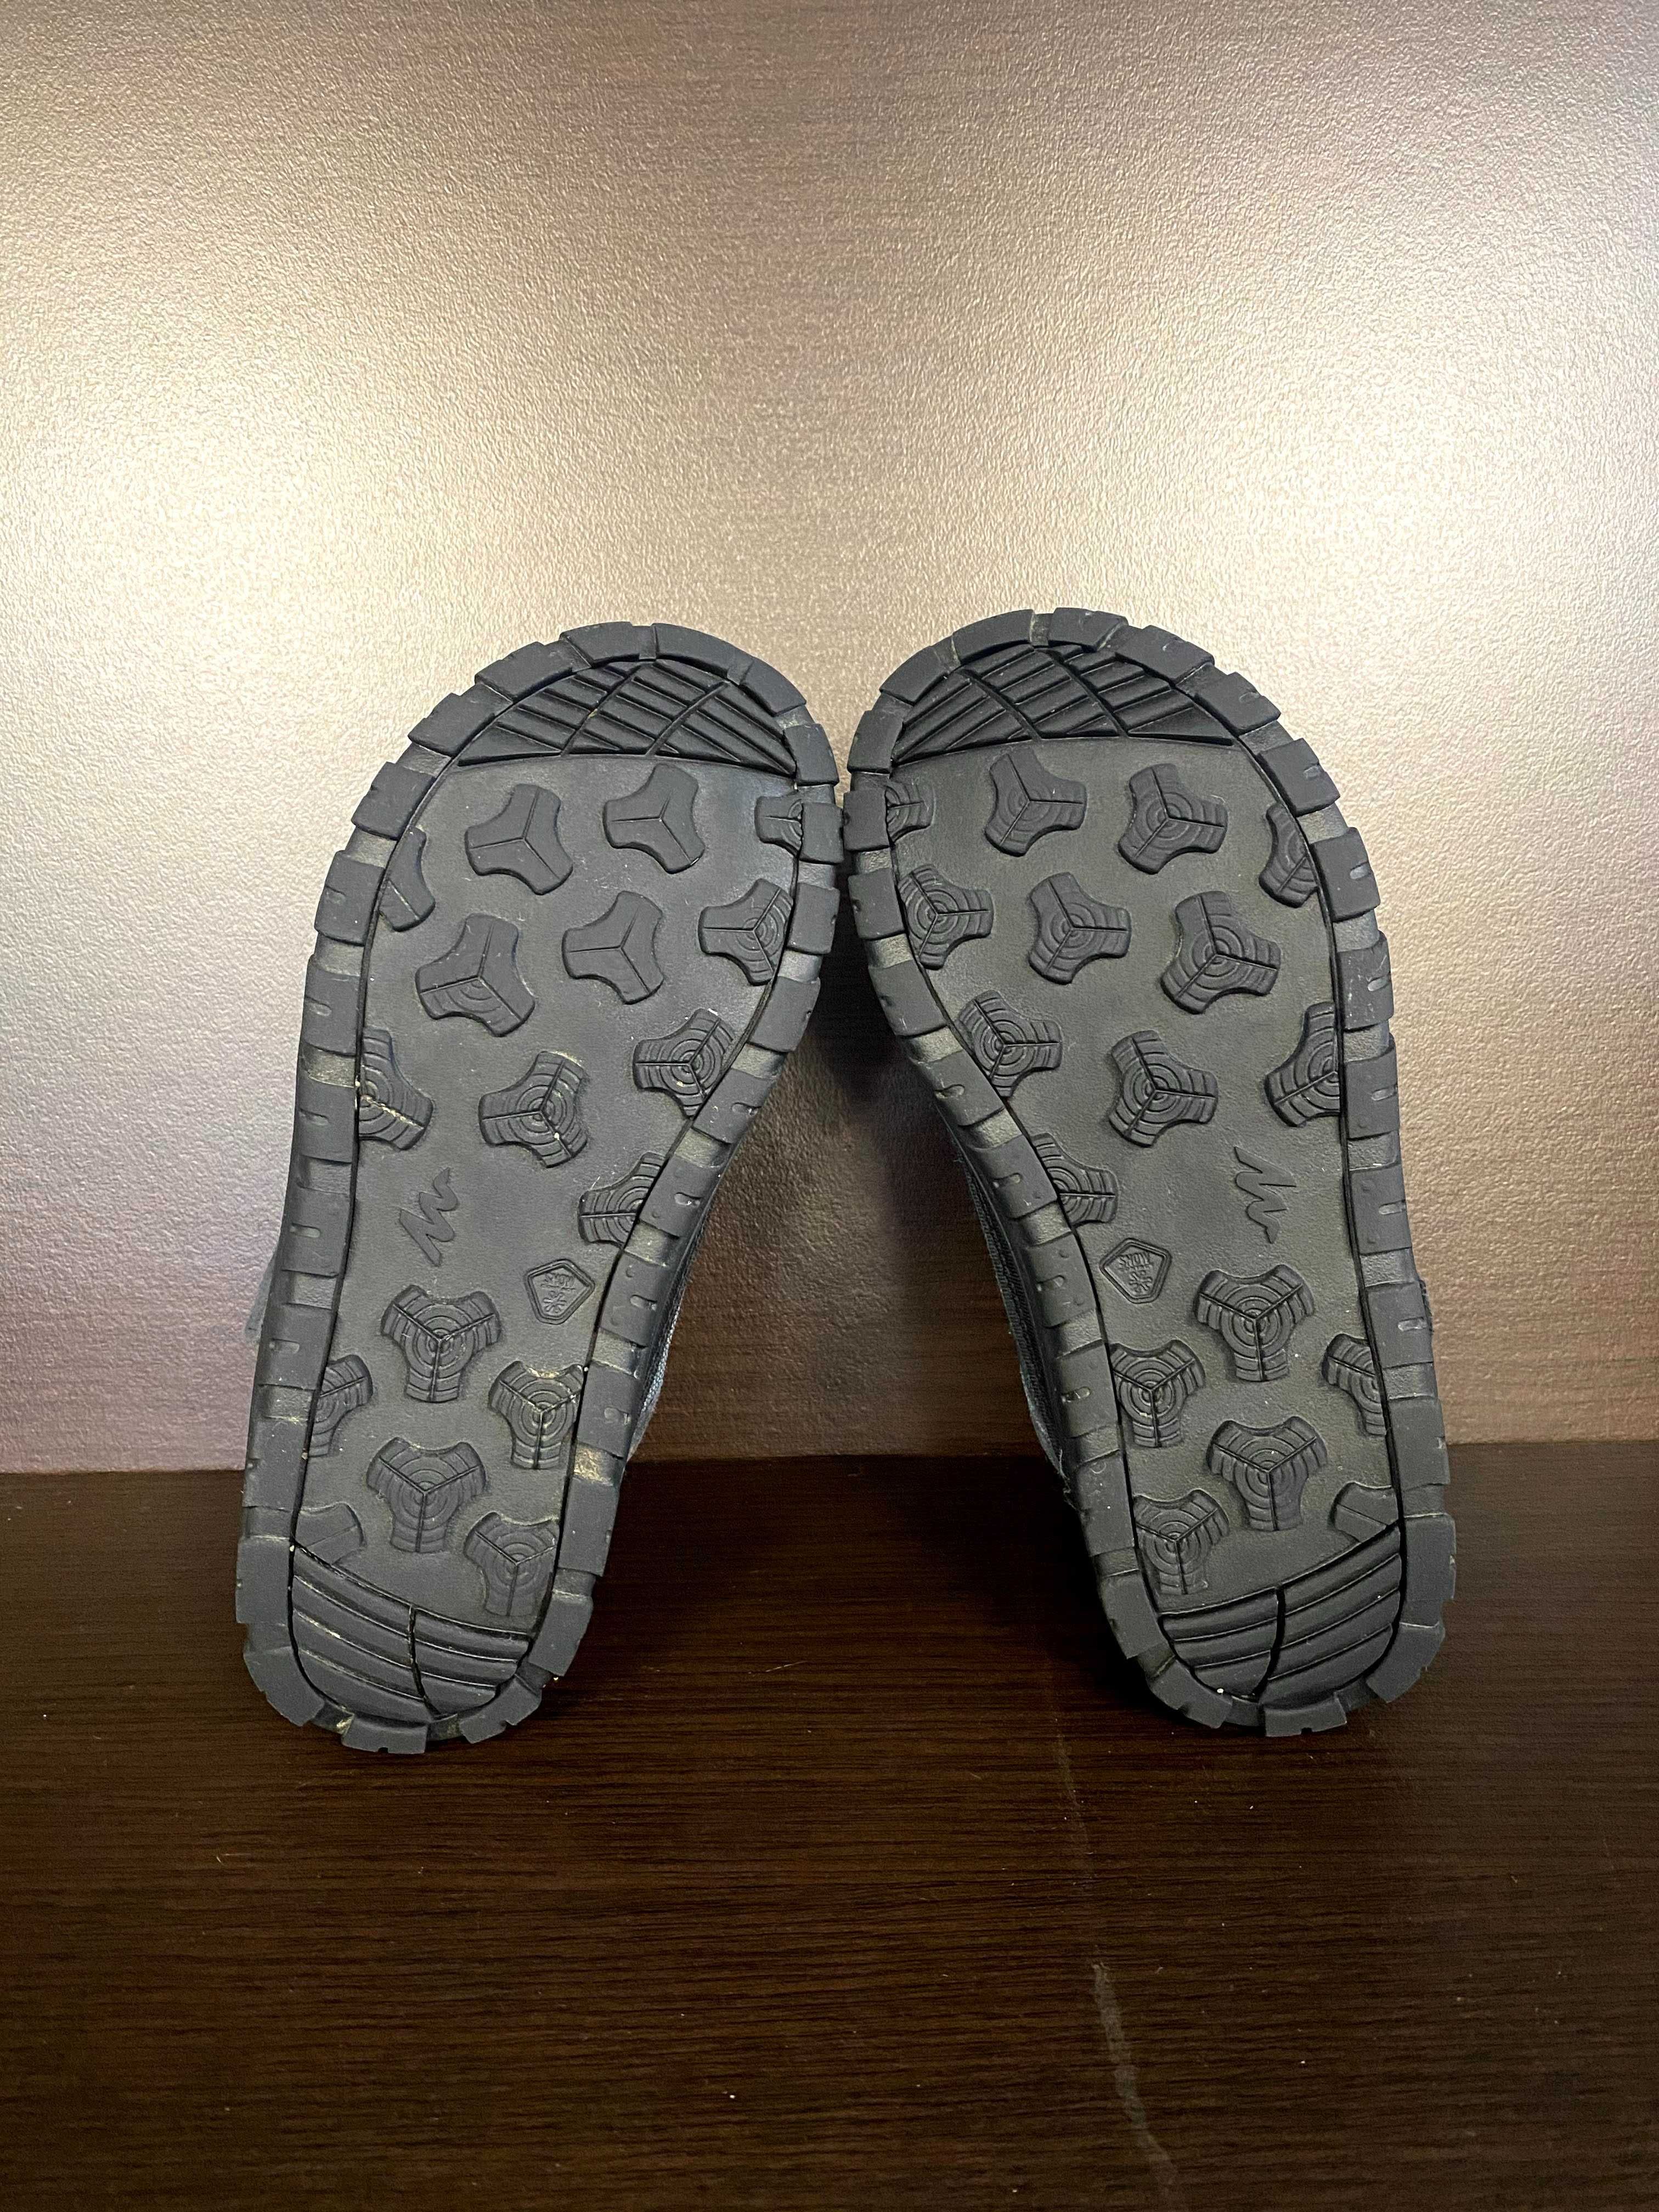 Детски непромокаеми туристически обувки за преходи SH500 warm, с велкр